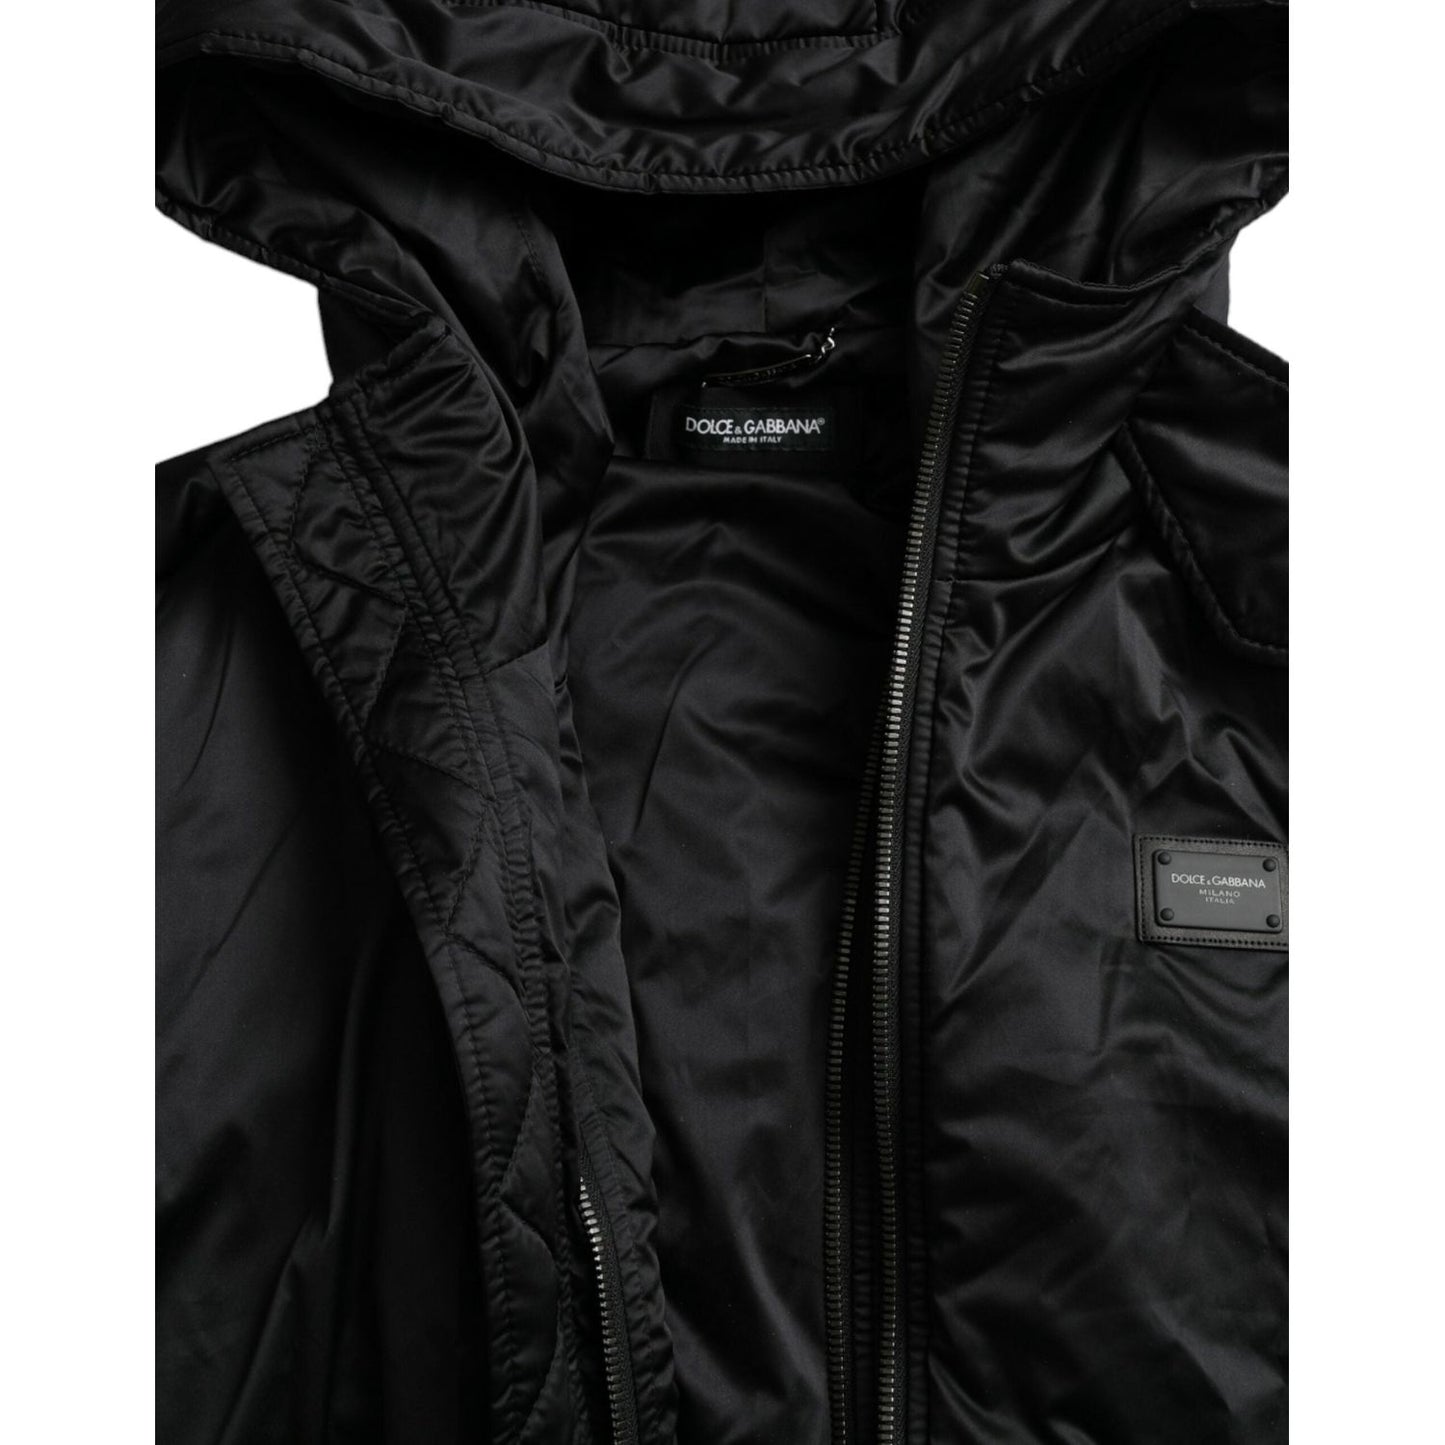 Dolce & Gabbana Elegant Black Hooded Parka Jacket black-polyester-hooded-logo-full-zip-jacket